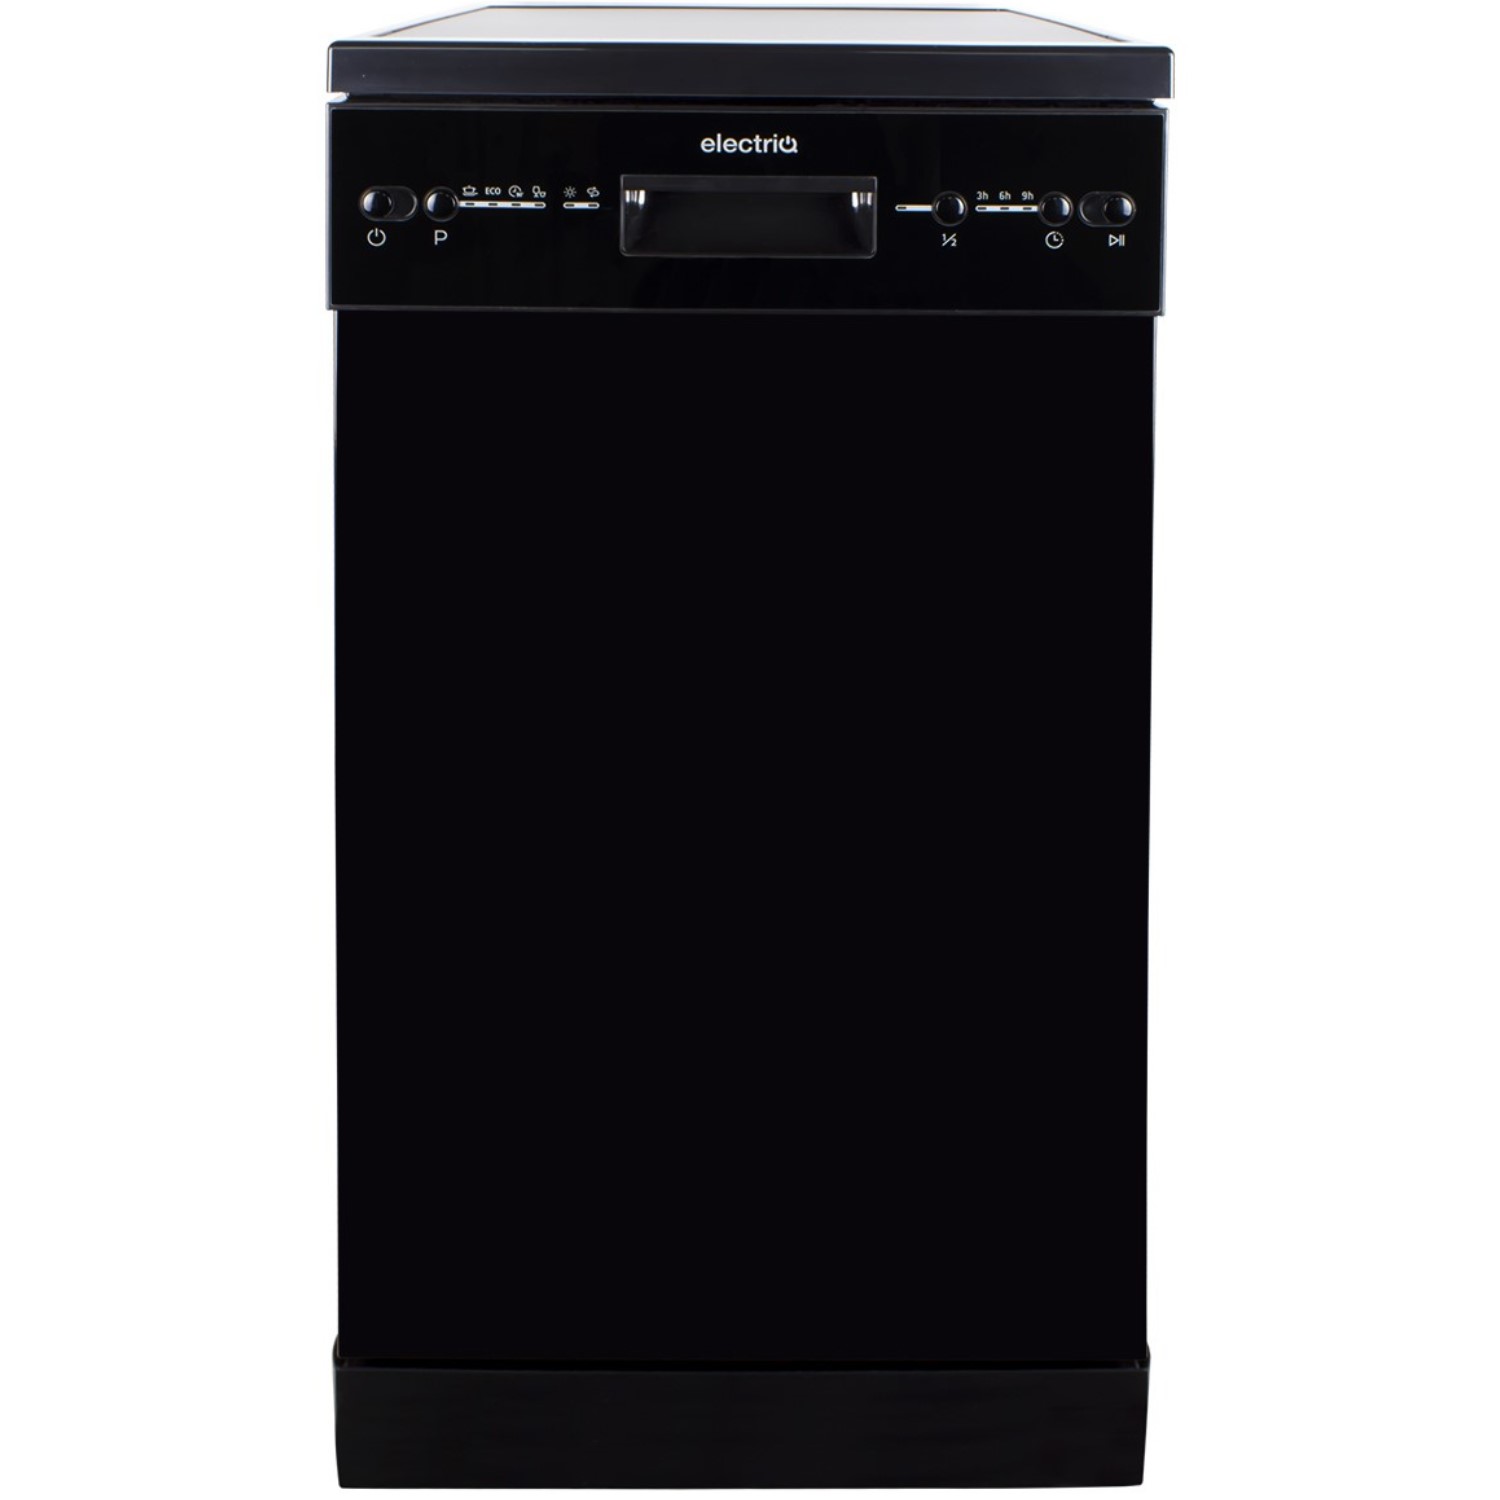 electriQ Slimline Freestanding Dishwasher - Black